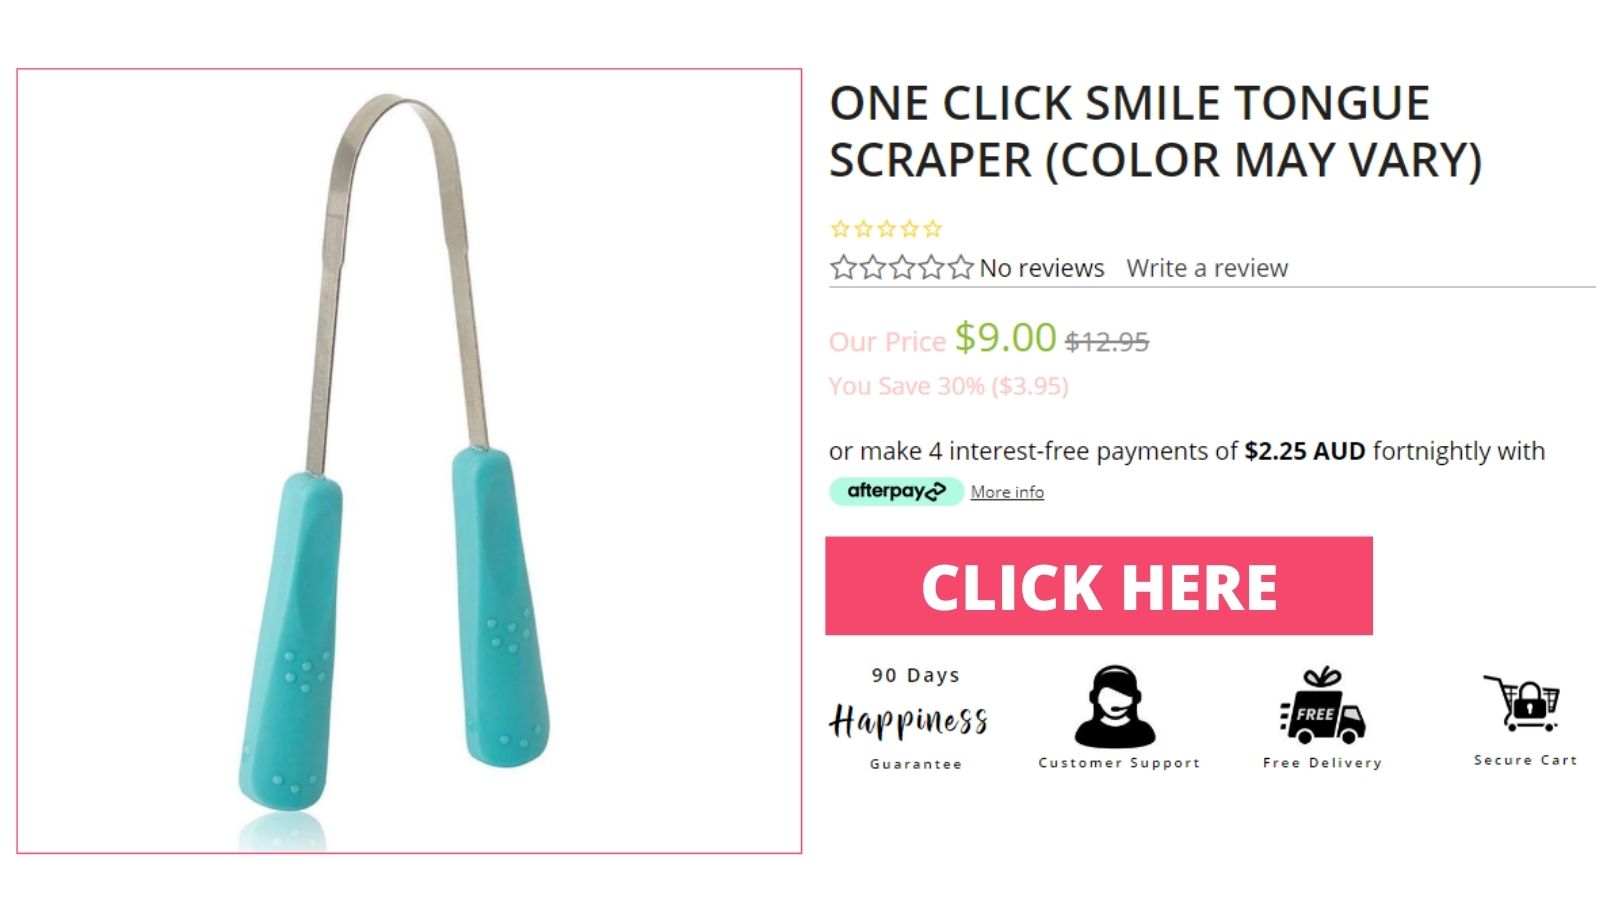 One Click Smile Tongue Scraper 